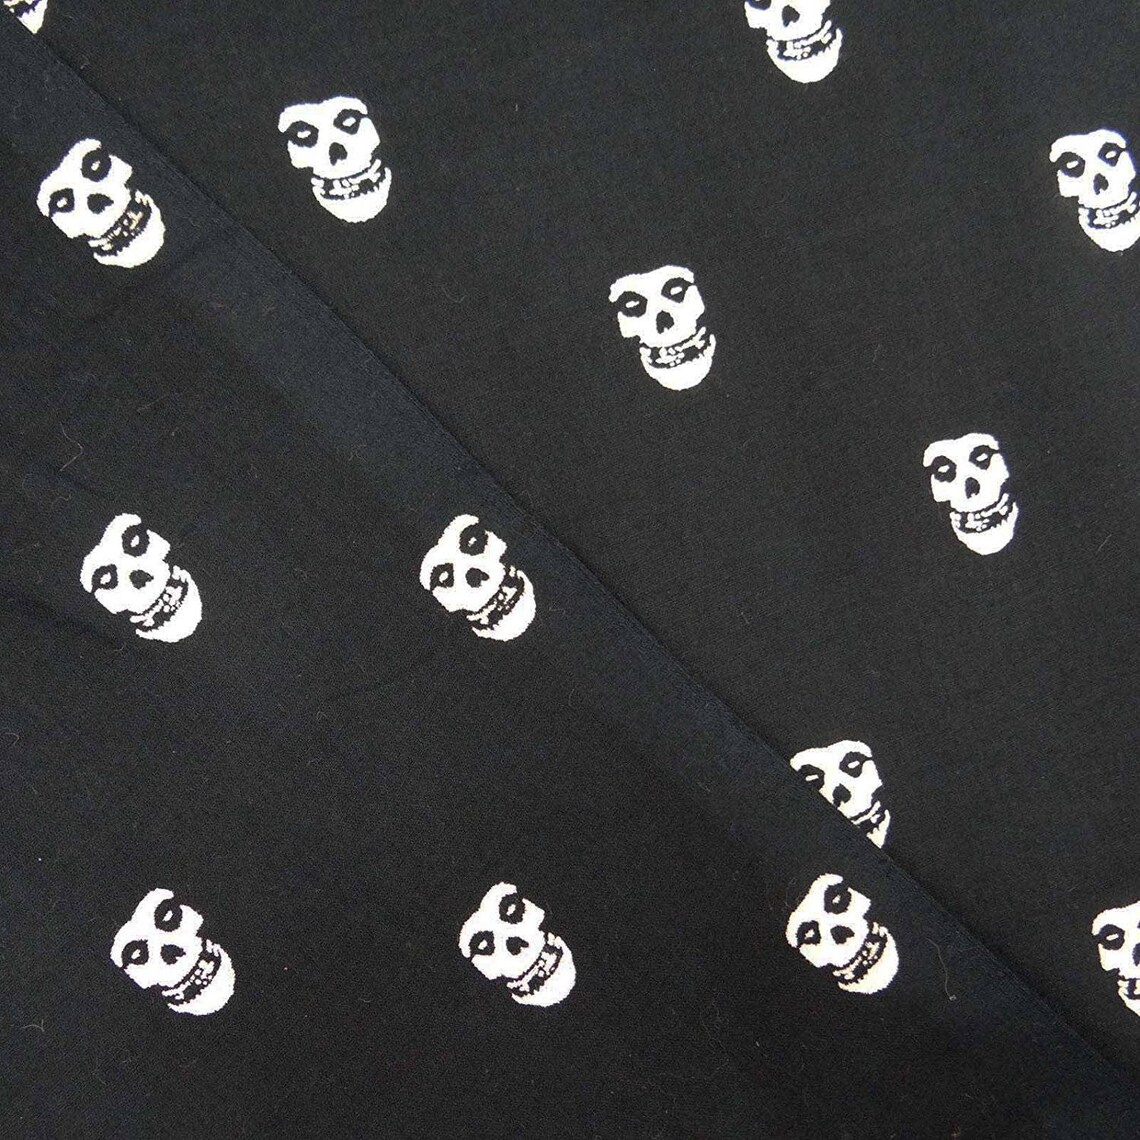 Upholstery Fabric Skull Print Black Fabric Dressmaking | Etsy